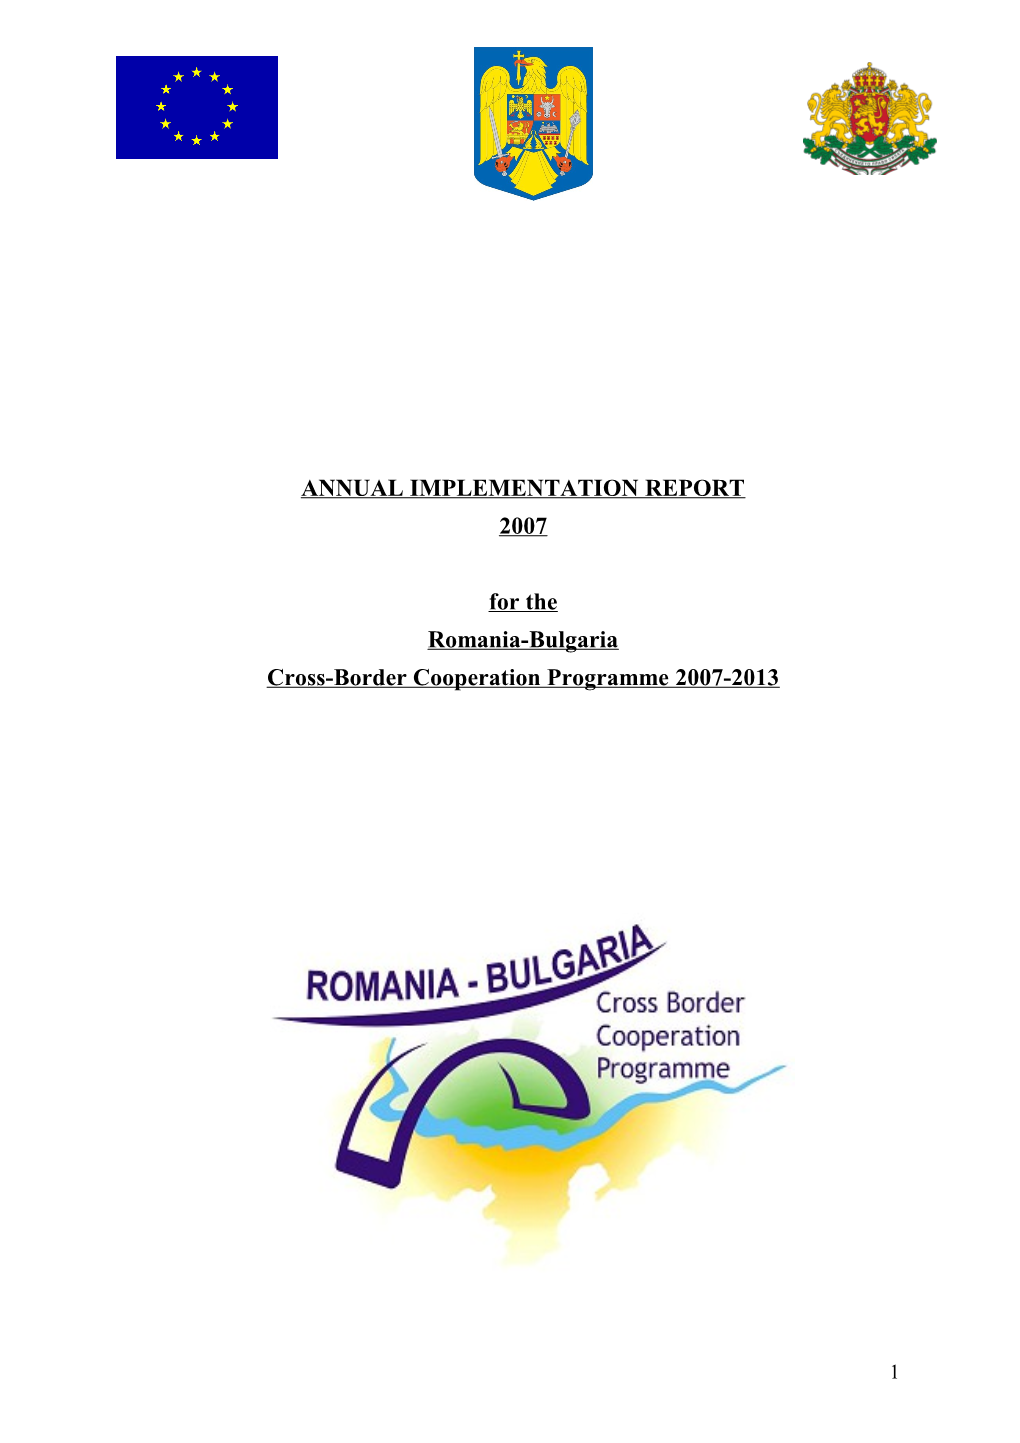 Cross-Border Cooperation Programme 2007-2013